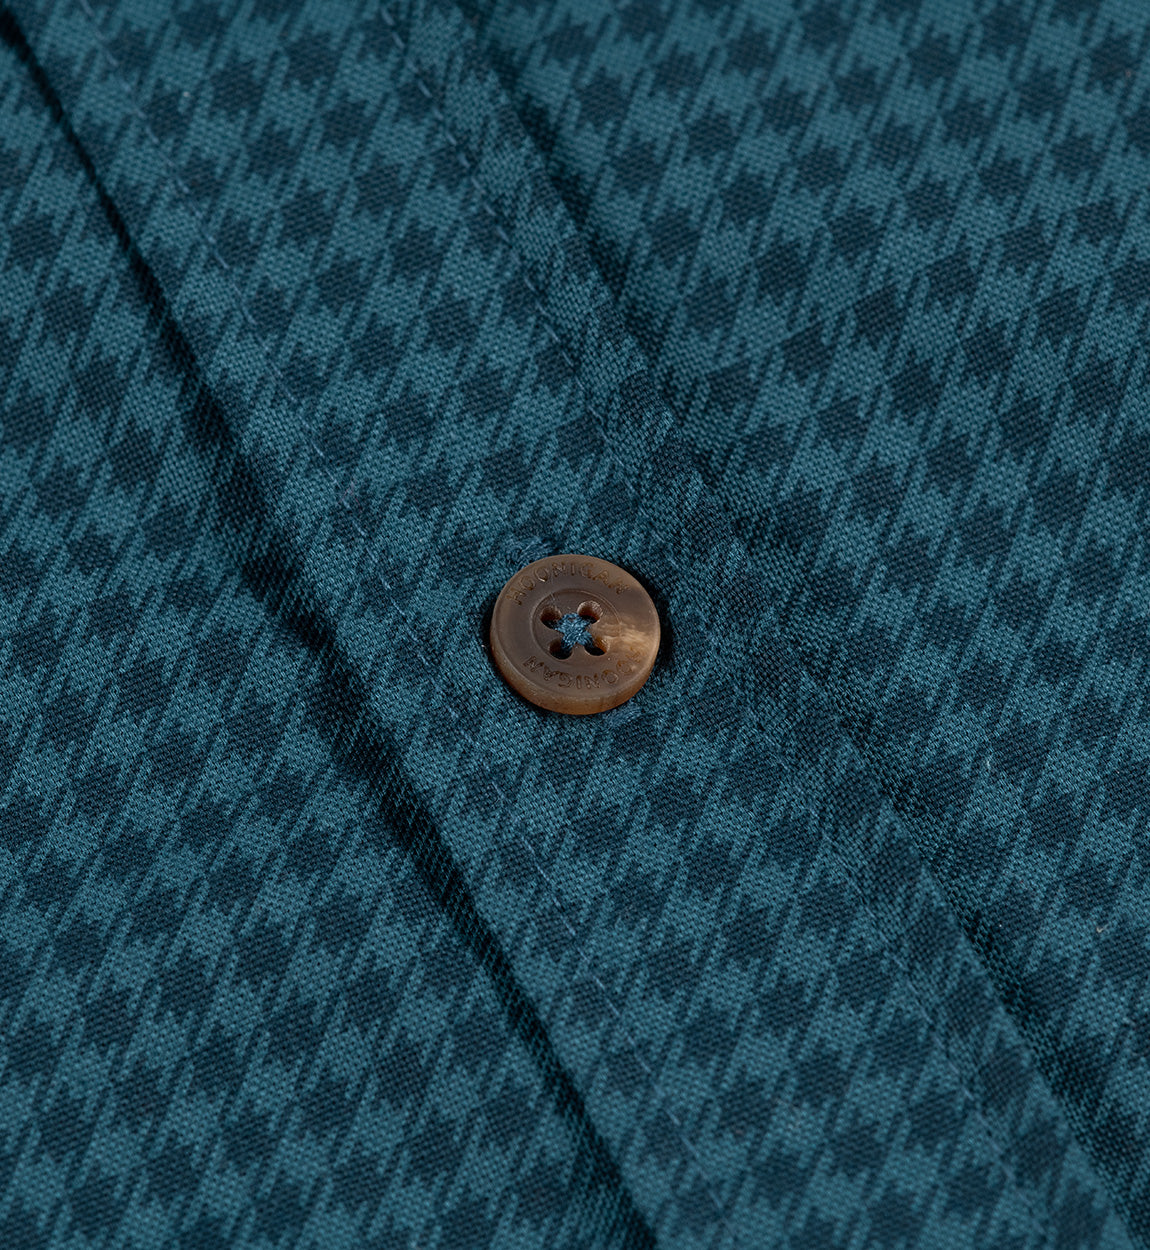 Hoonigan Pepita short sleeve button up shirt. Pattern inspired by the classic Porsche Pepita Houndstooth pattern.